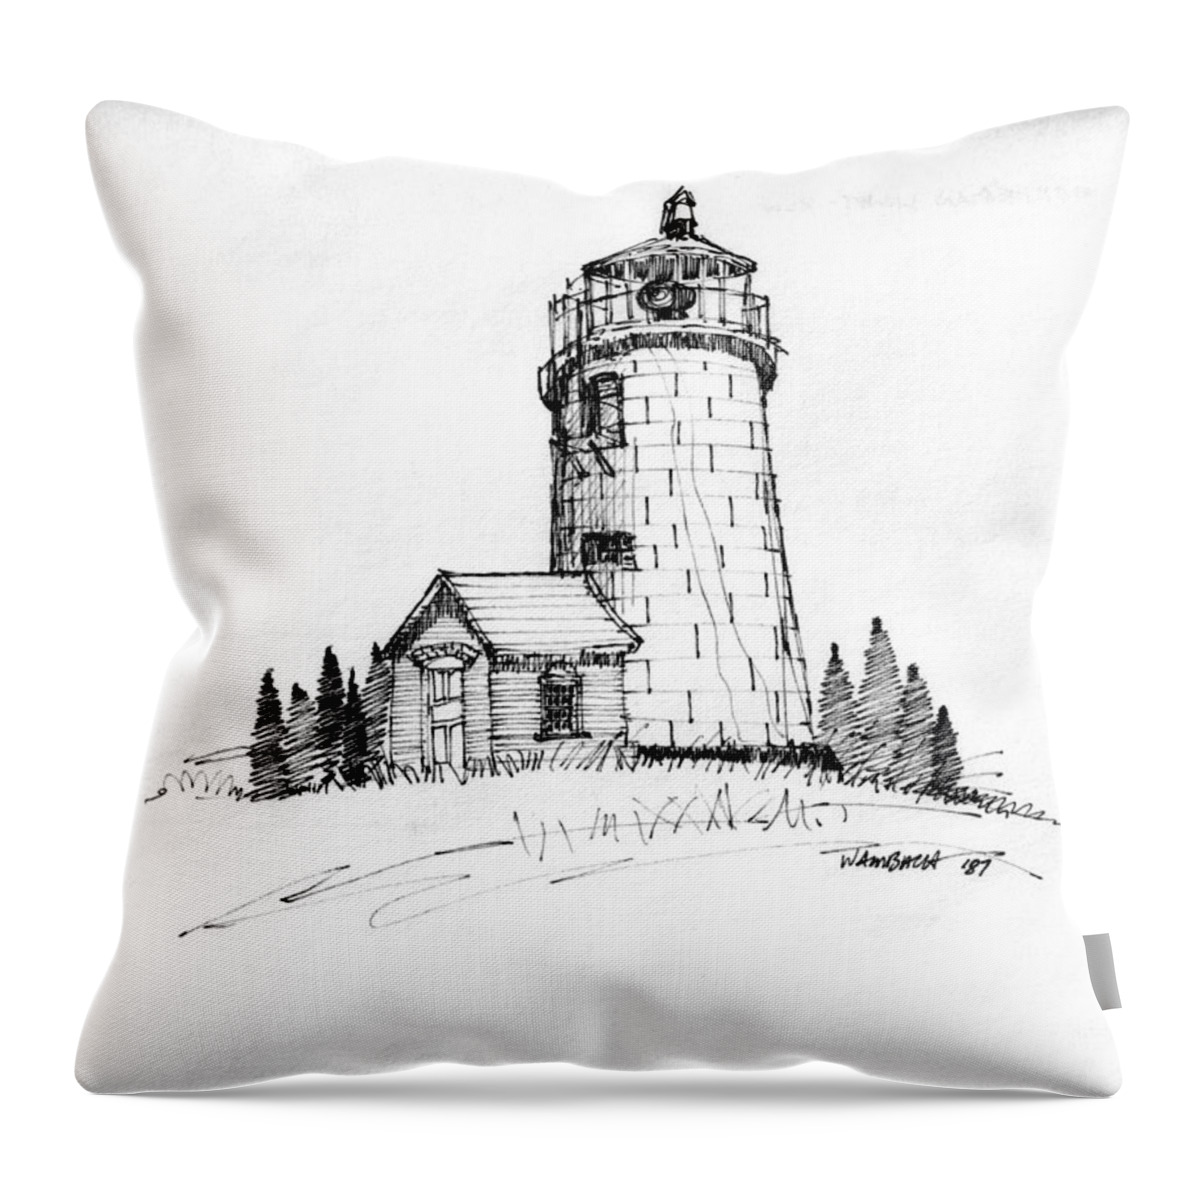 Monhegan Island Throw Pillow featuring the drawing Monhegan Lighthouse 1987 by Richard Wambach